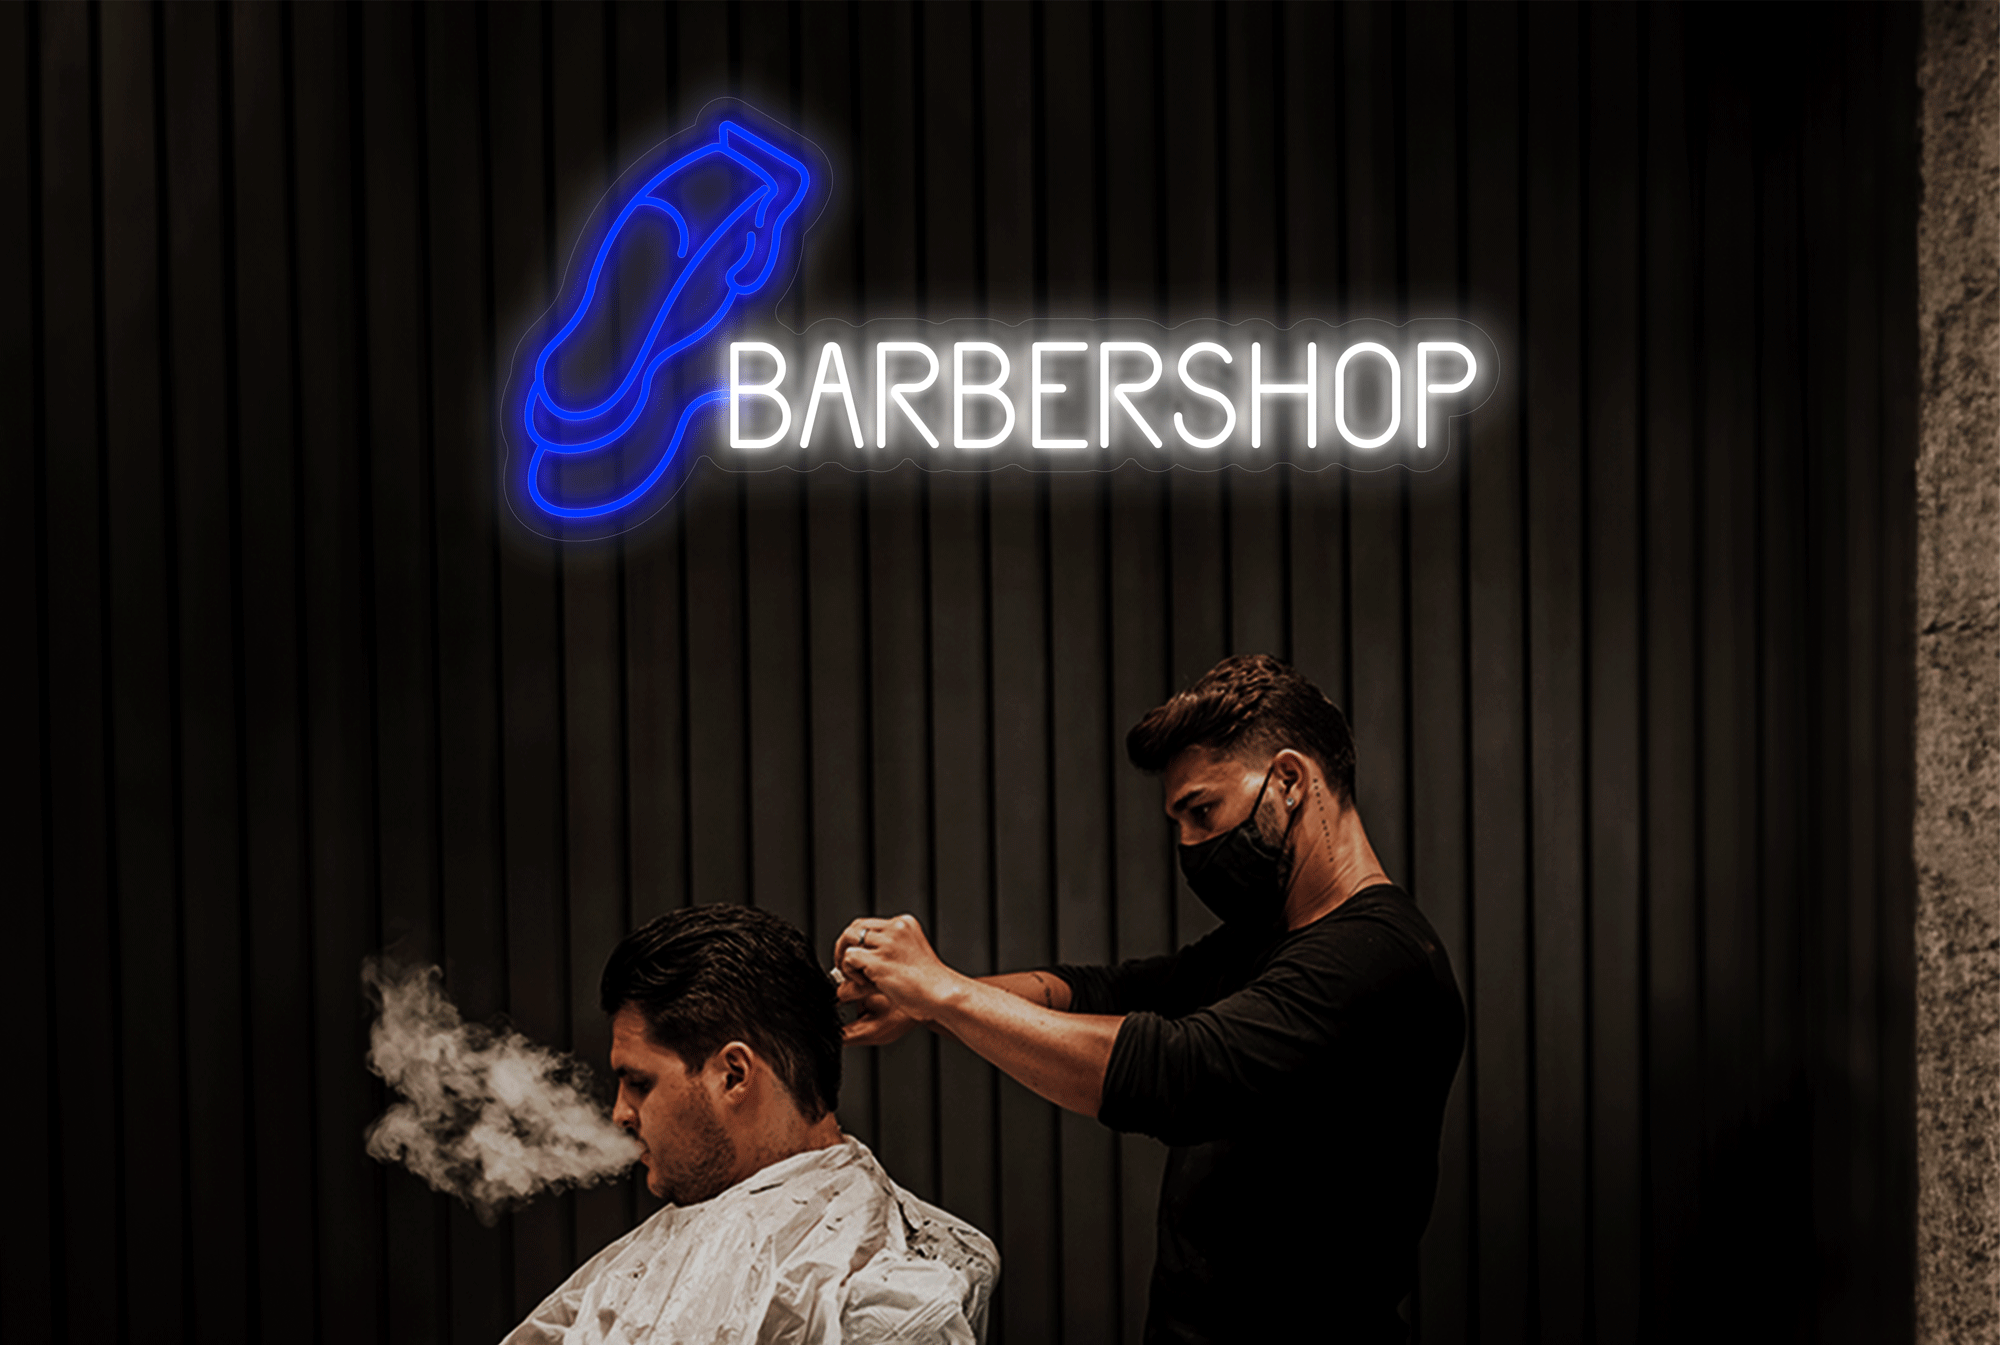 "Barbershop" with Razor LED Neon Sign